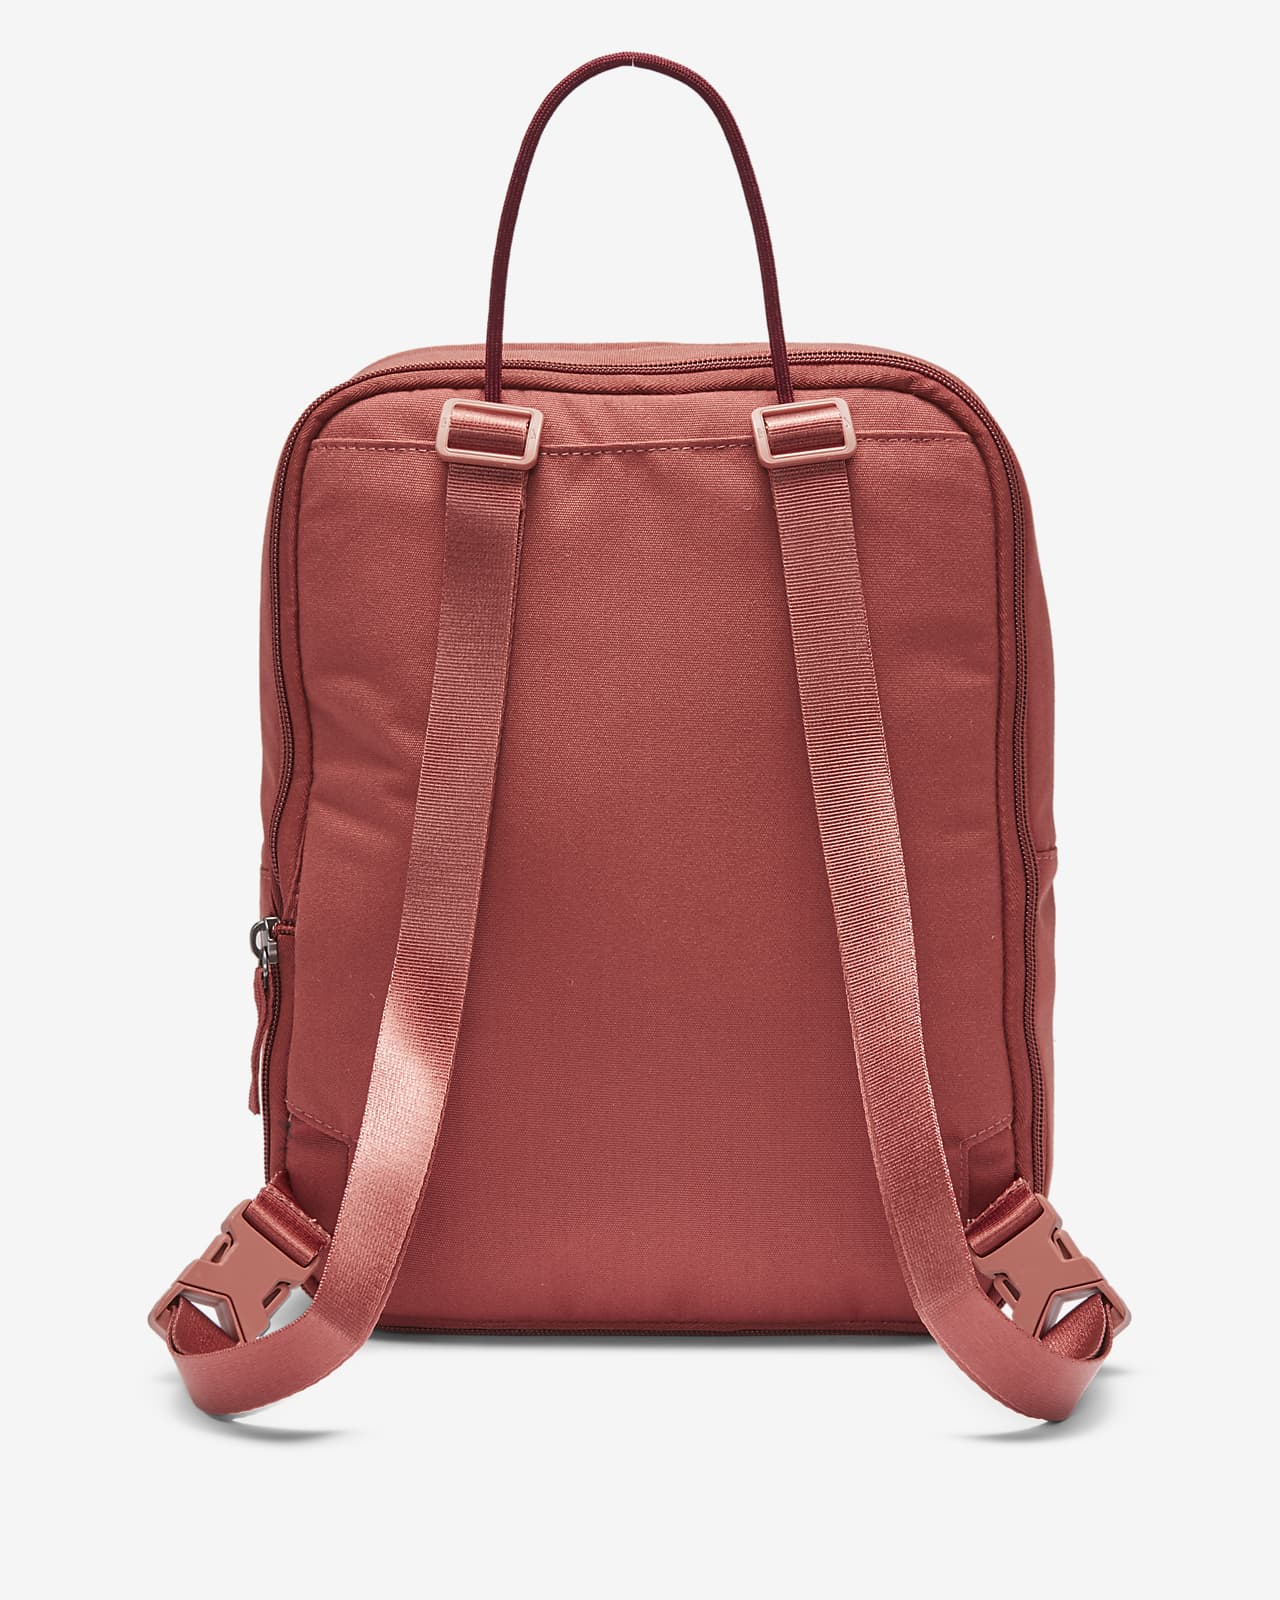 nike tanjun pink backpack